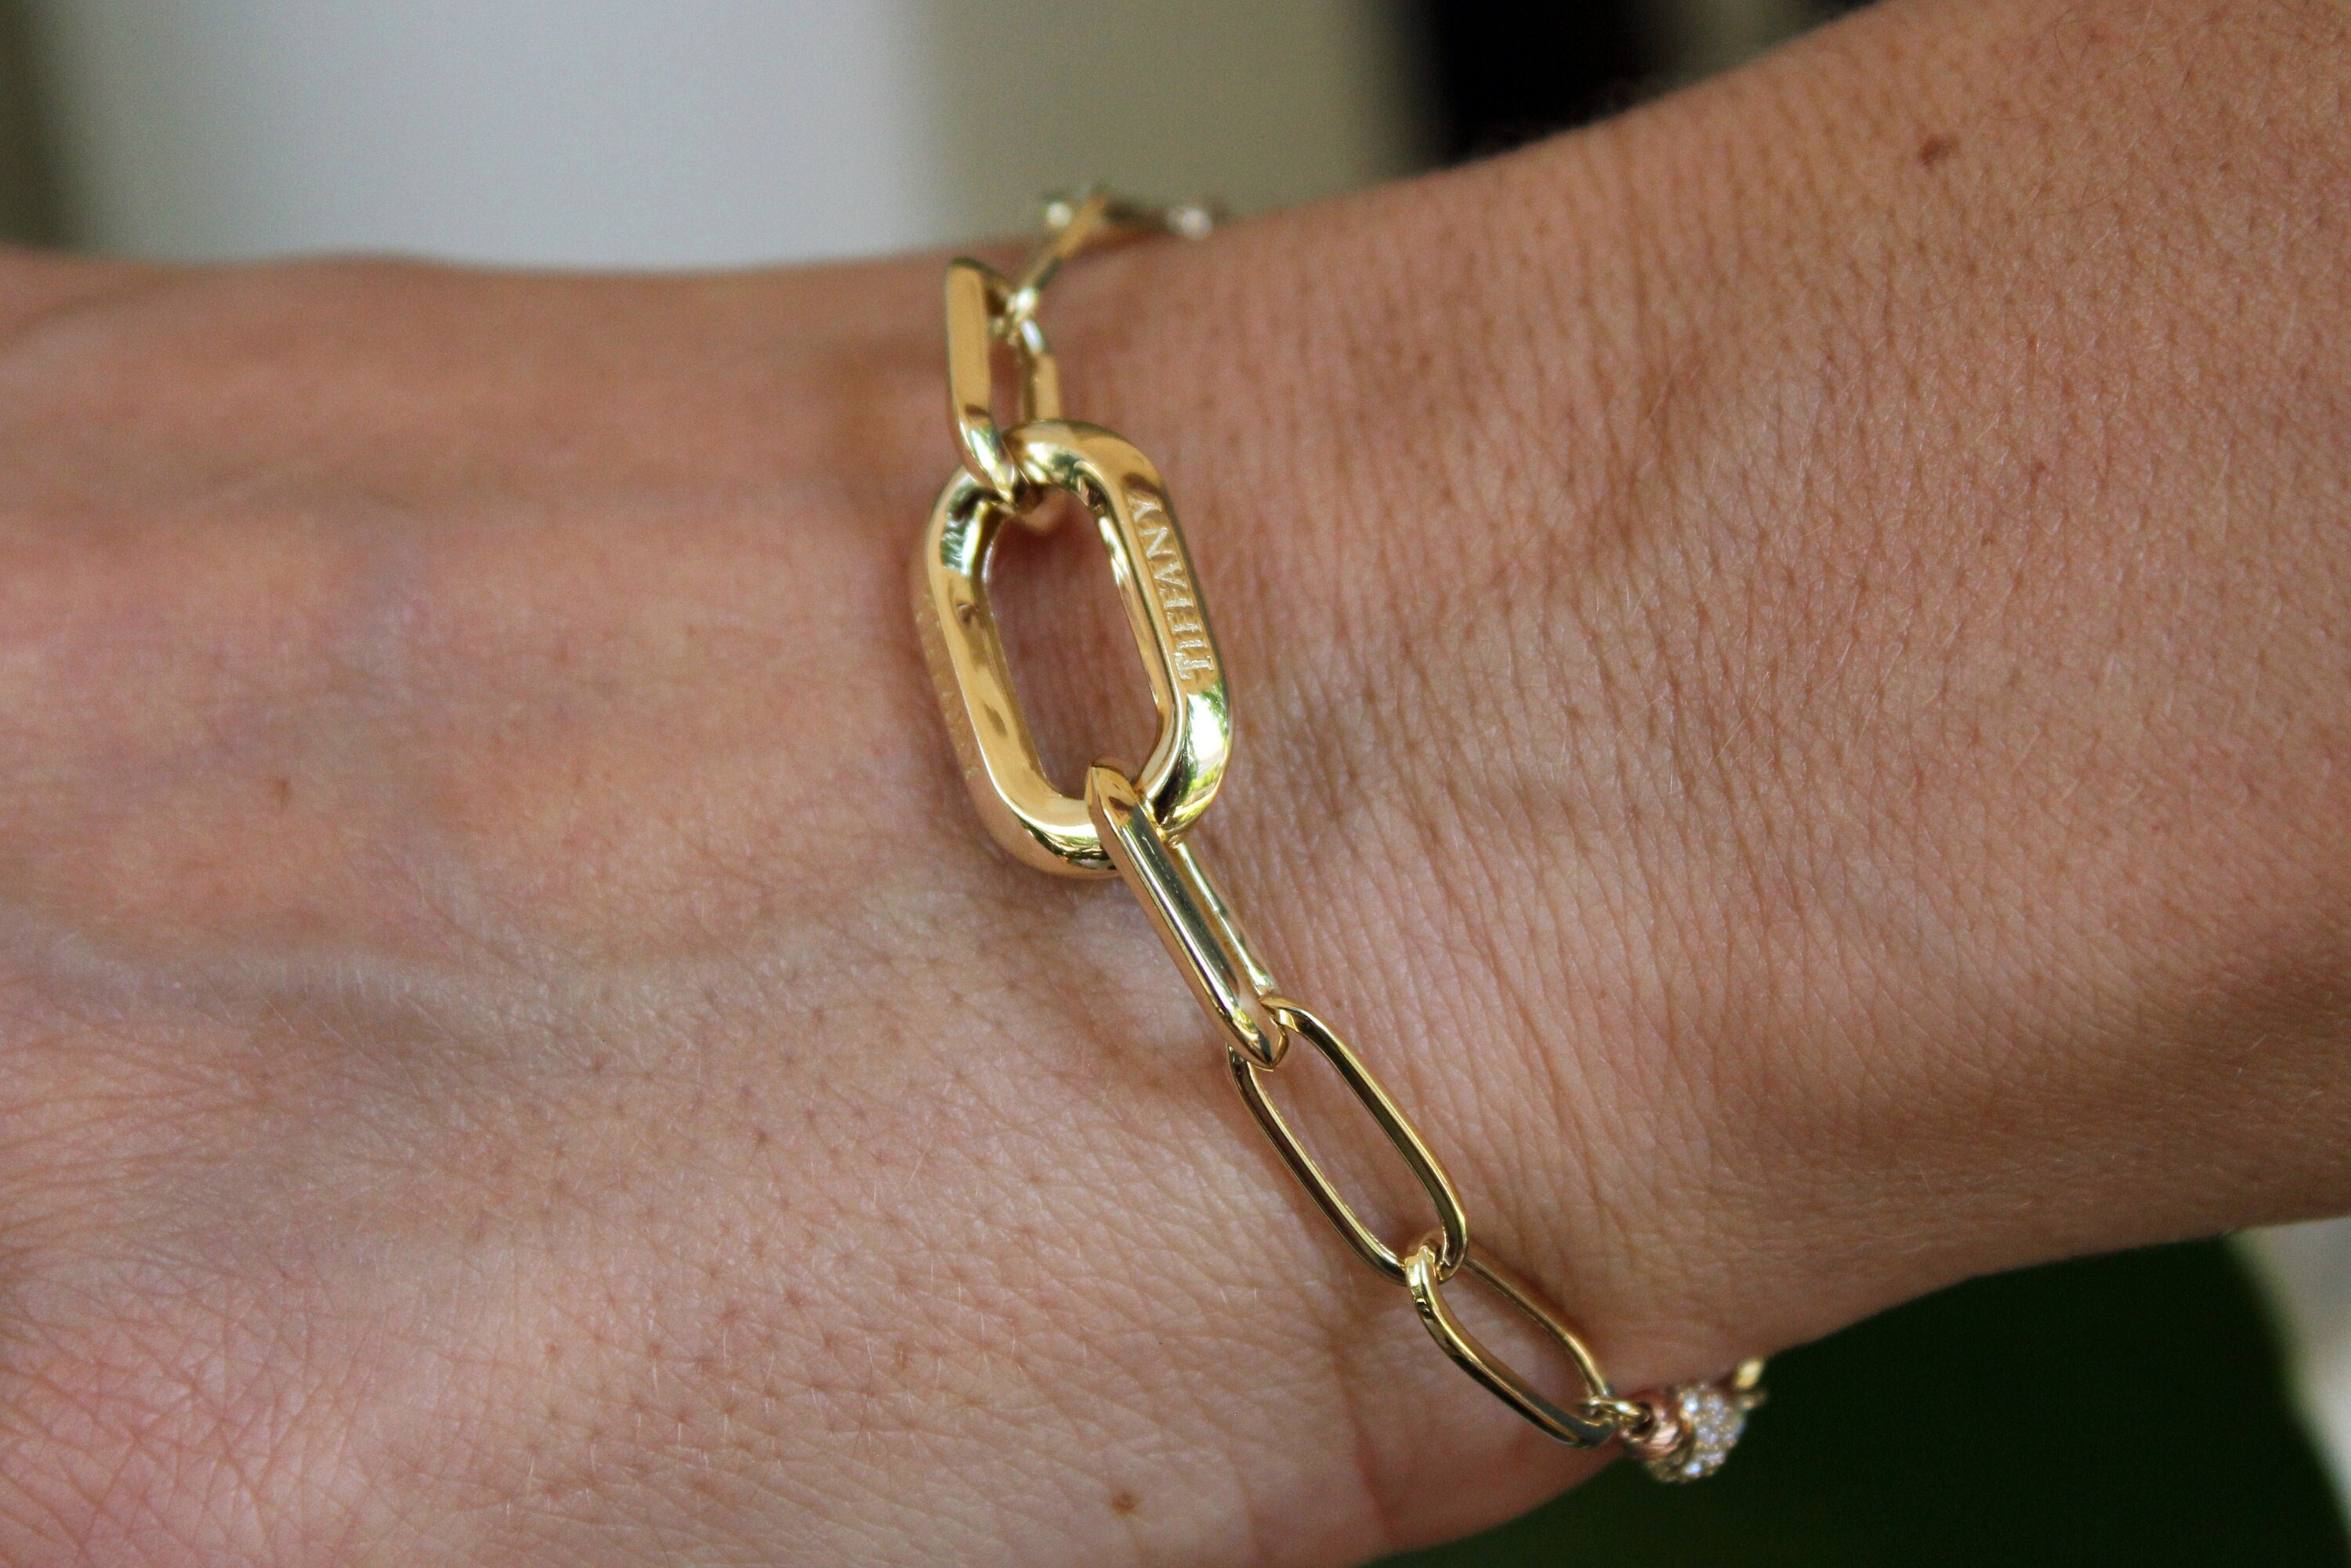 Paperclip Necklace or Bracelet Extender 